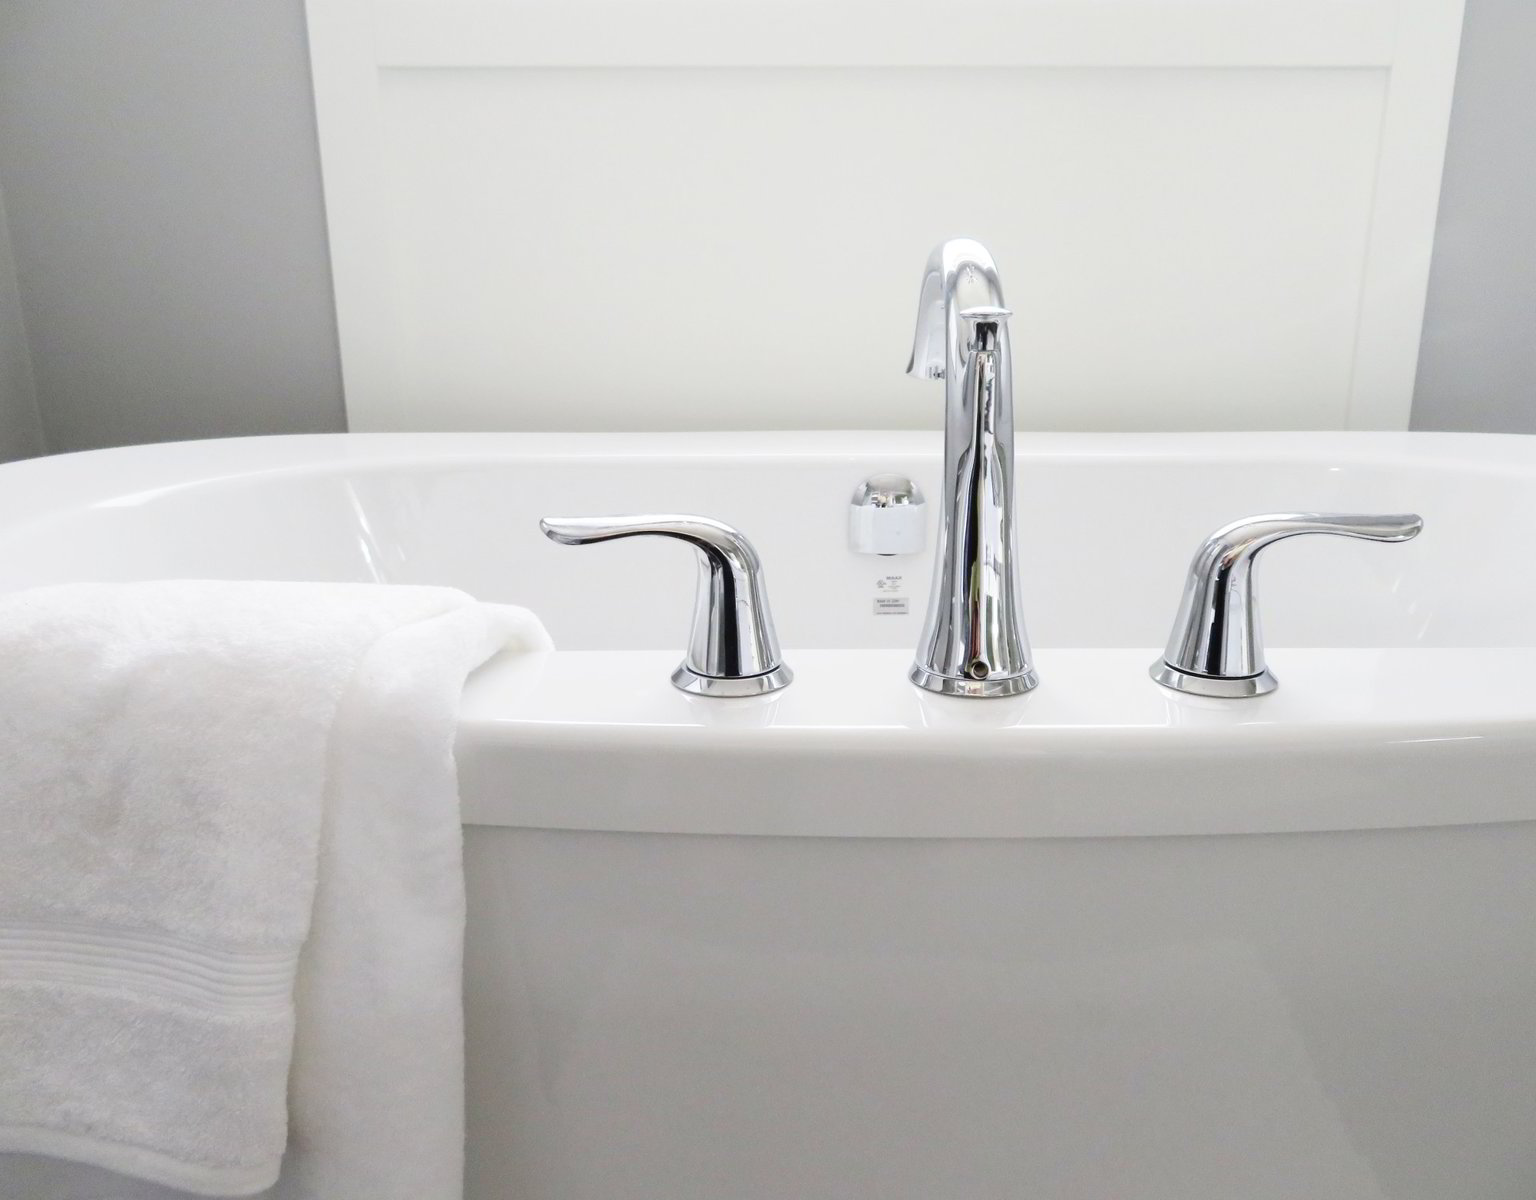 How To Fix A Leaky Bathtub Faucet, How To Fix Bathtub Faucet Valve